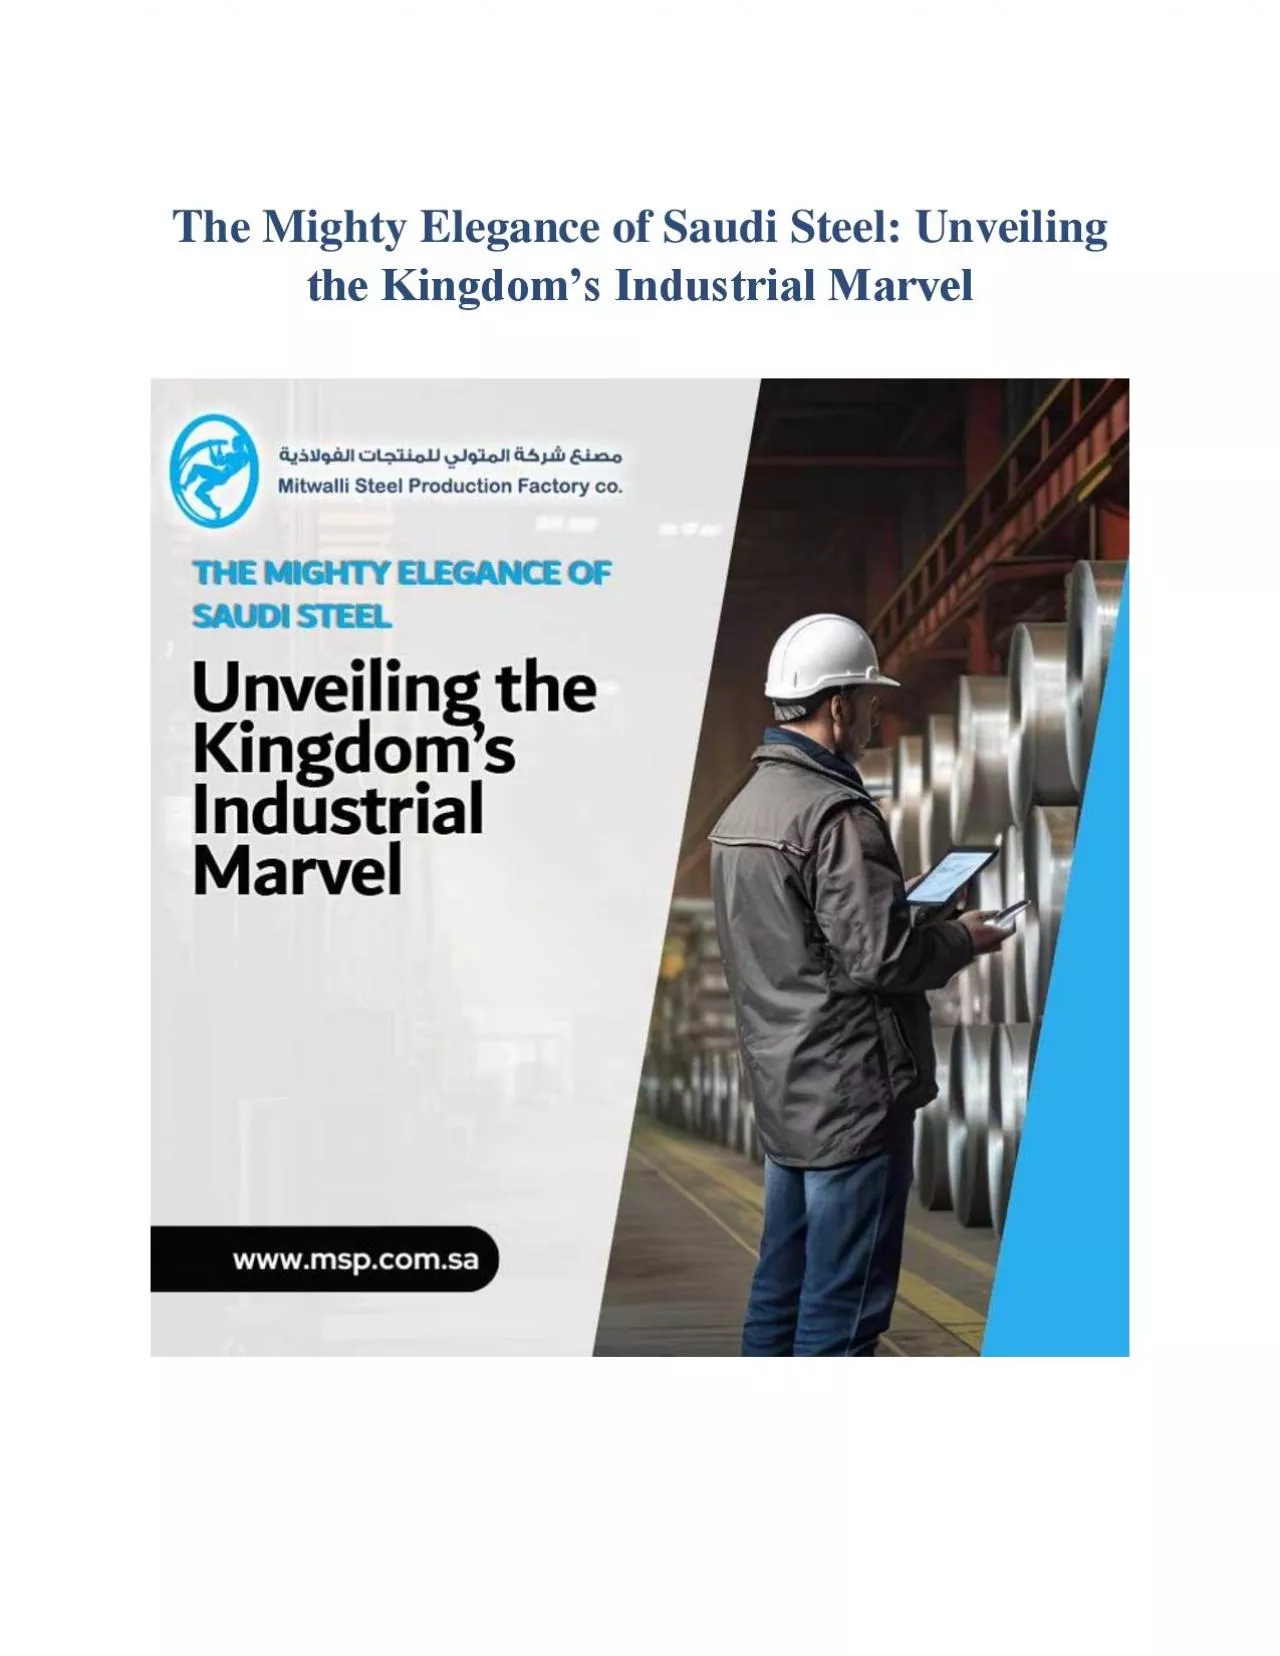 The Elegance and Craftsmanship of Saudi Steel